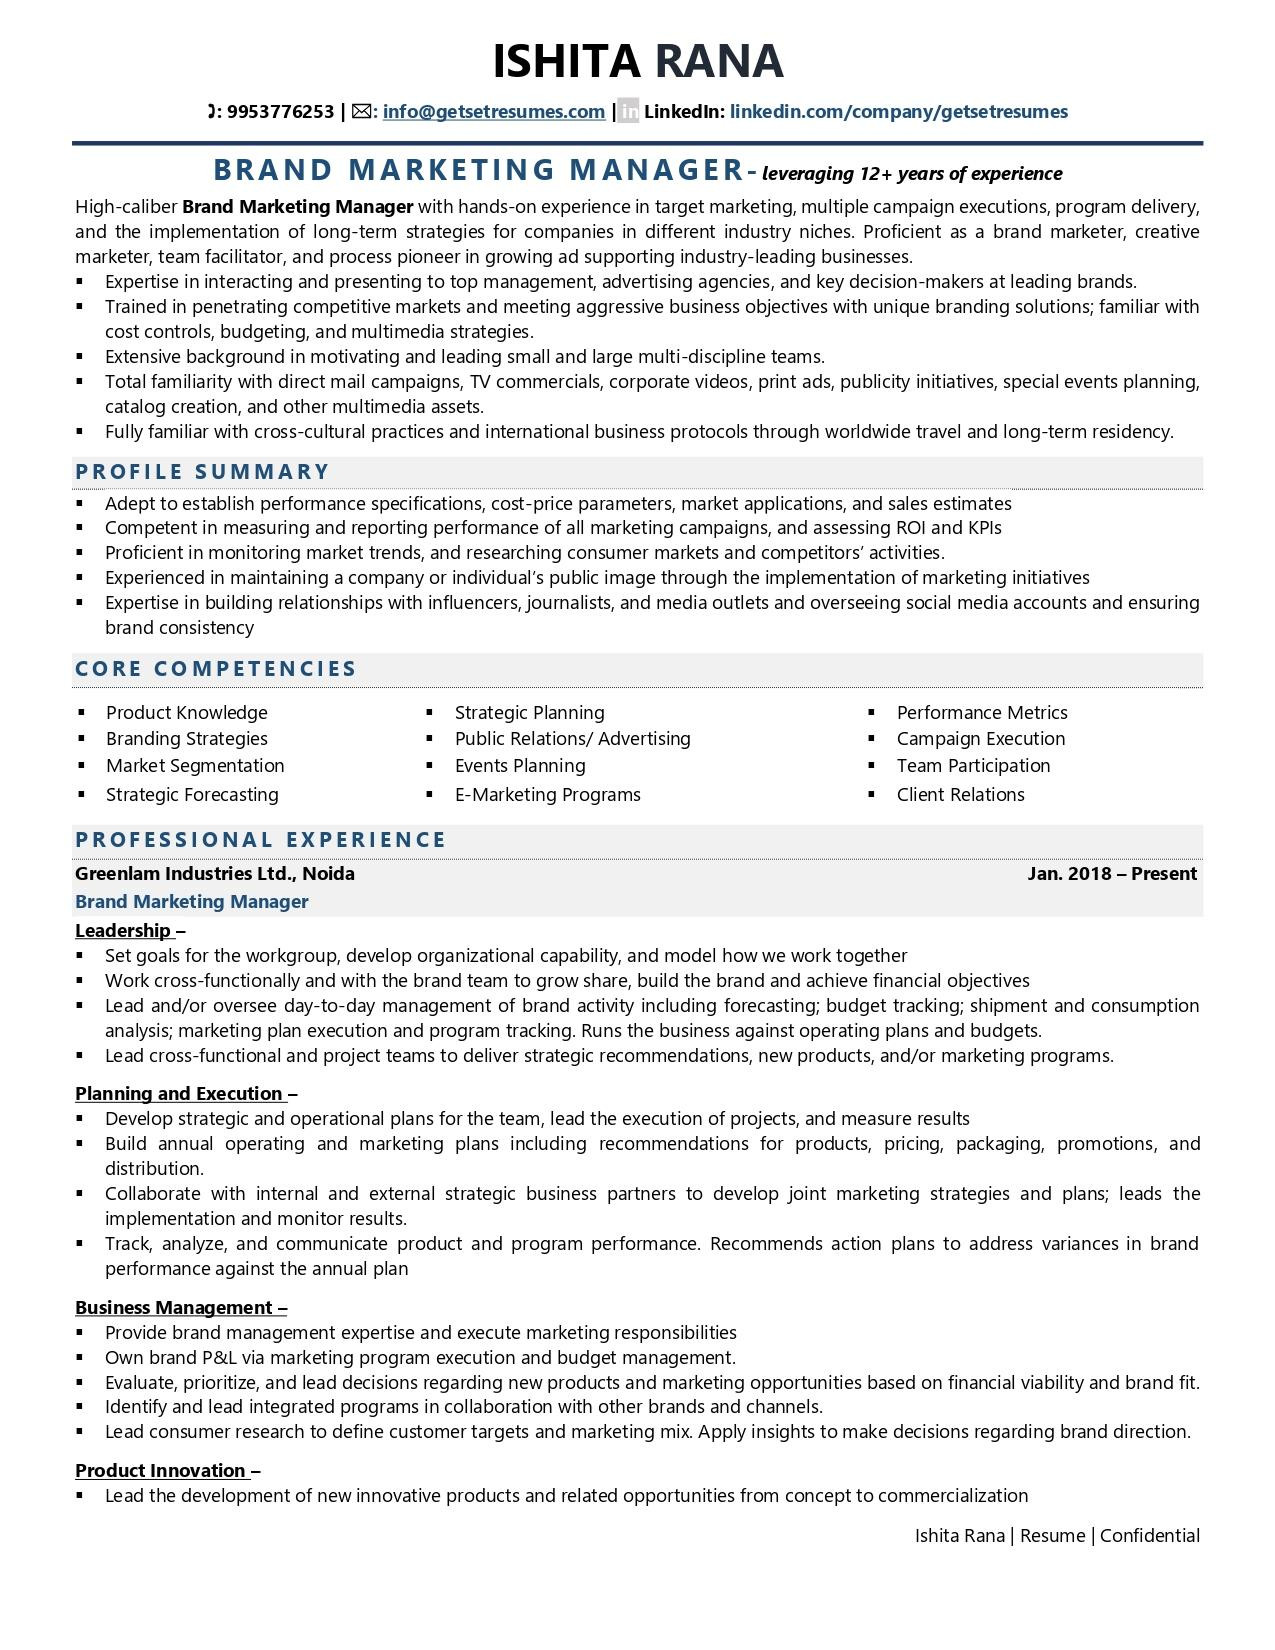 Sample Resume for Brand Marketing Manager Brand Marketing Manager Resume Examples & Template (with Job …